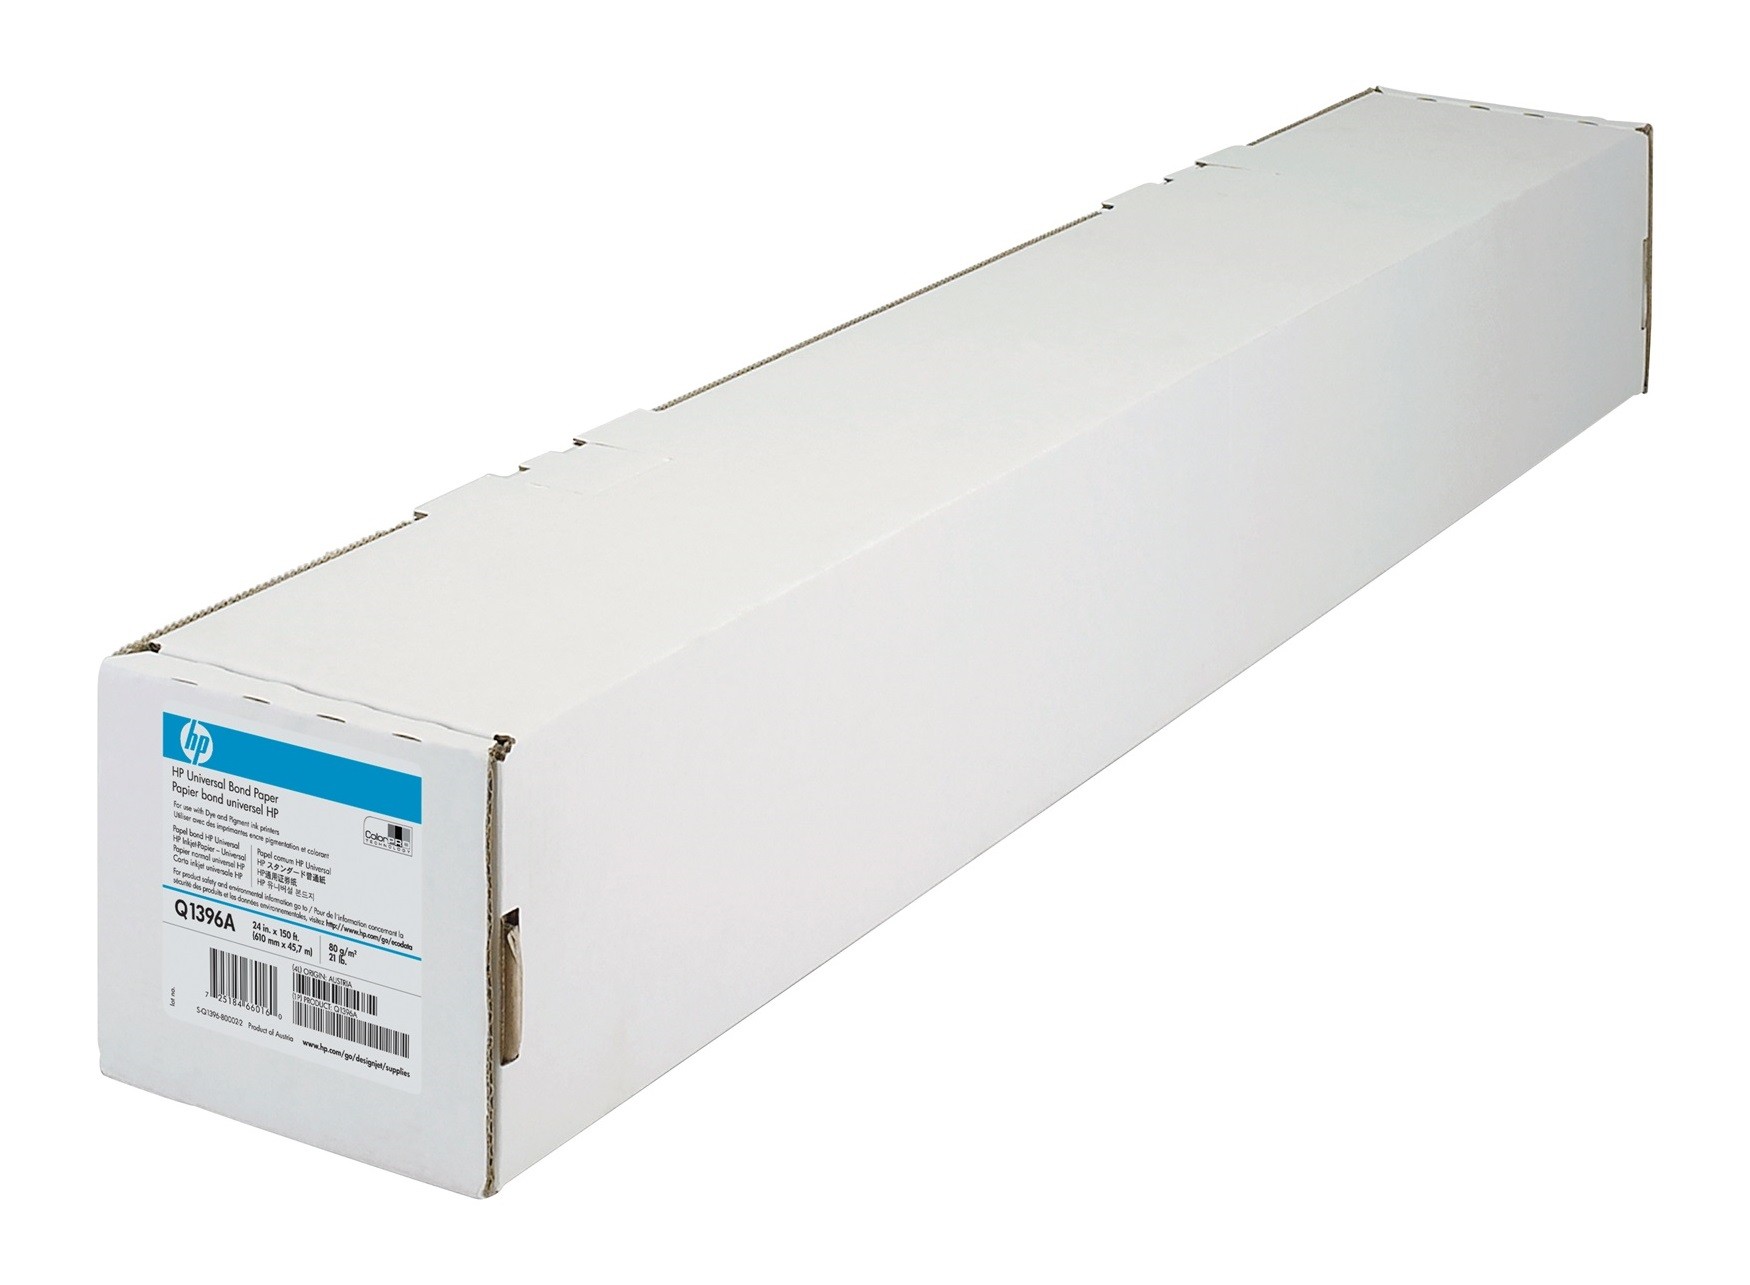 Brand New Original HP Q1396A Inkjet Bond Paper (1 Roll - 24 in x 150 ft)